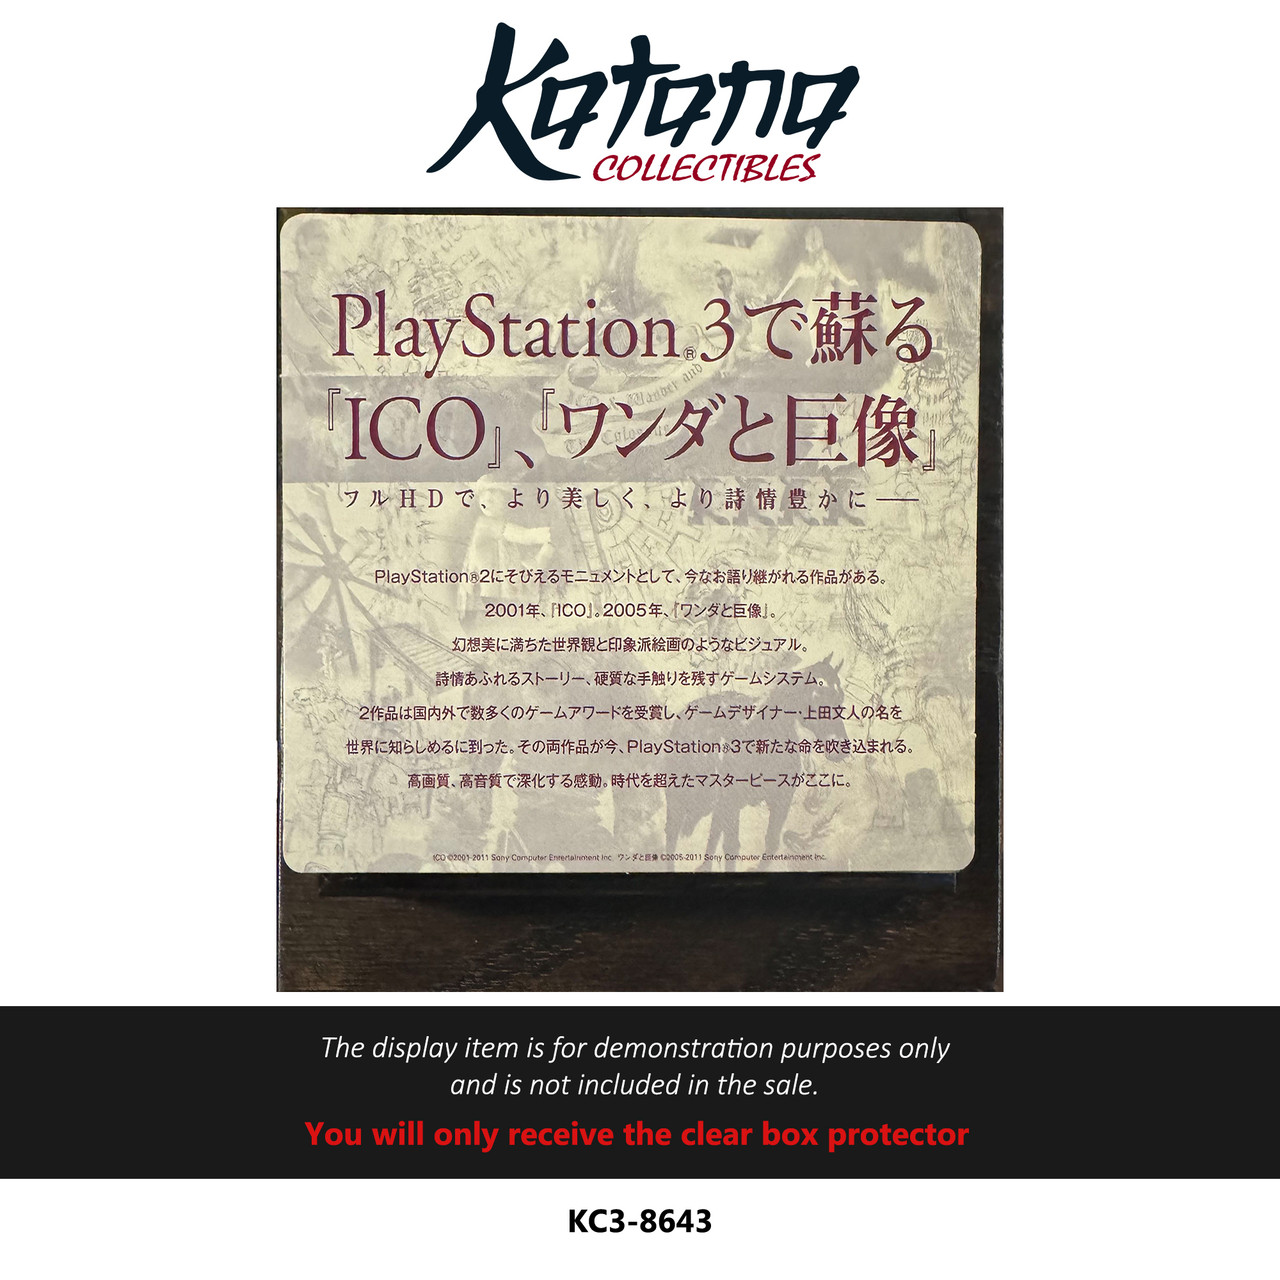 Katana Collectibles Protector For Ico Ps3 Display Card